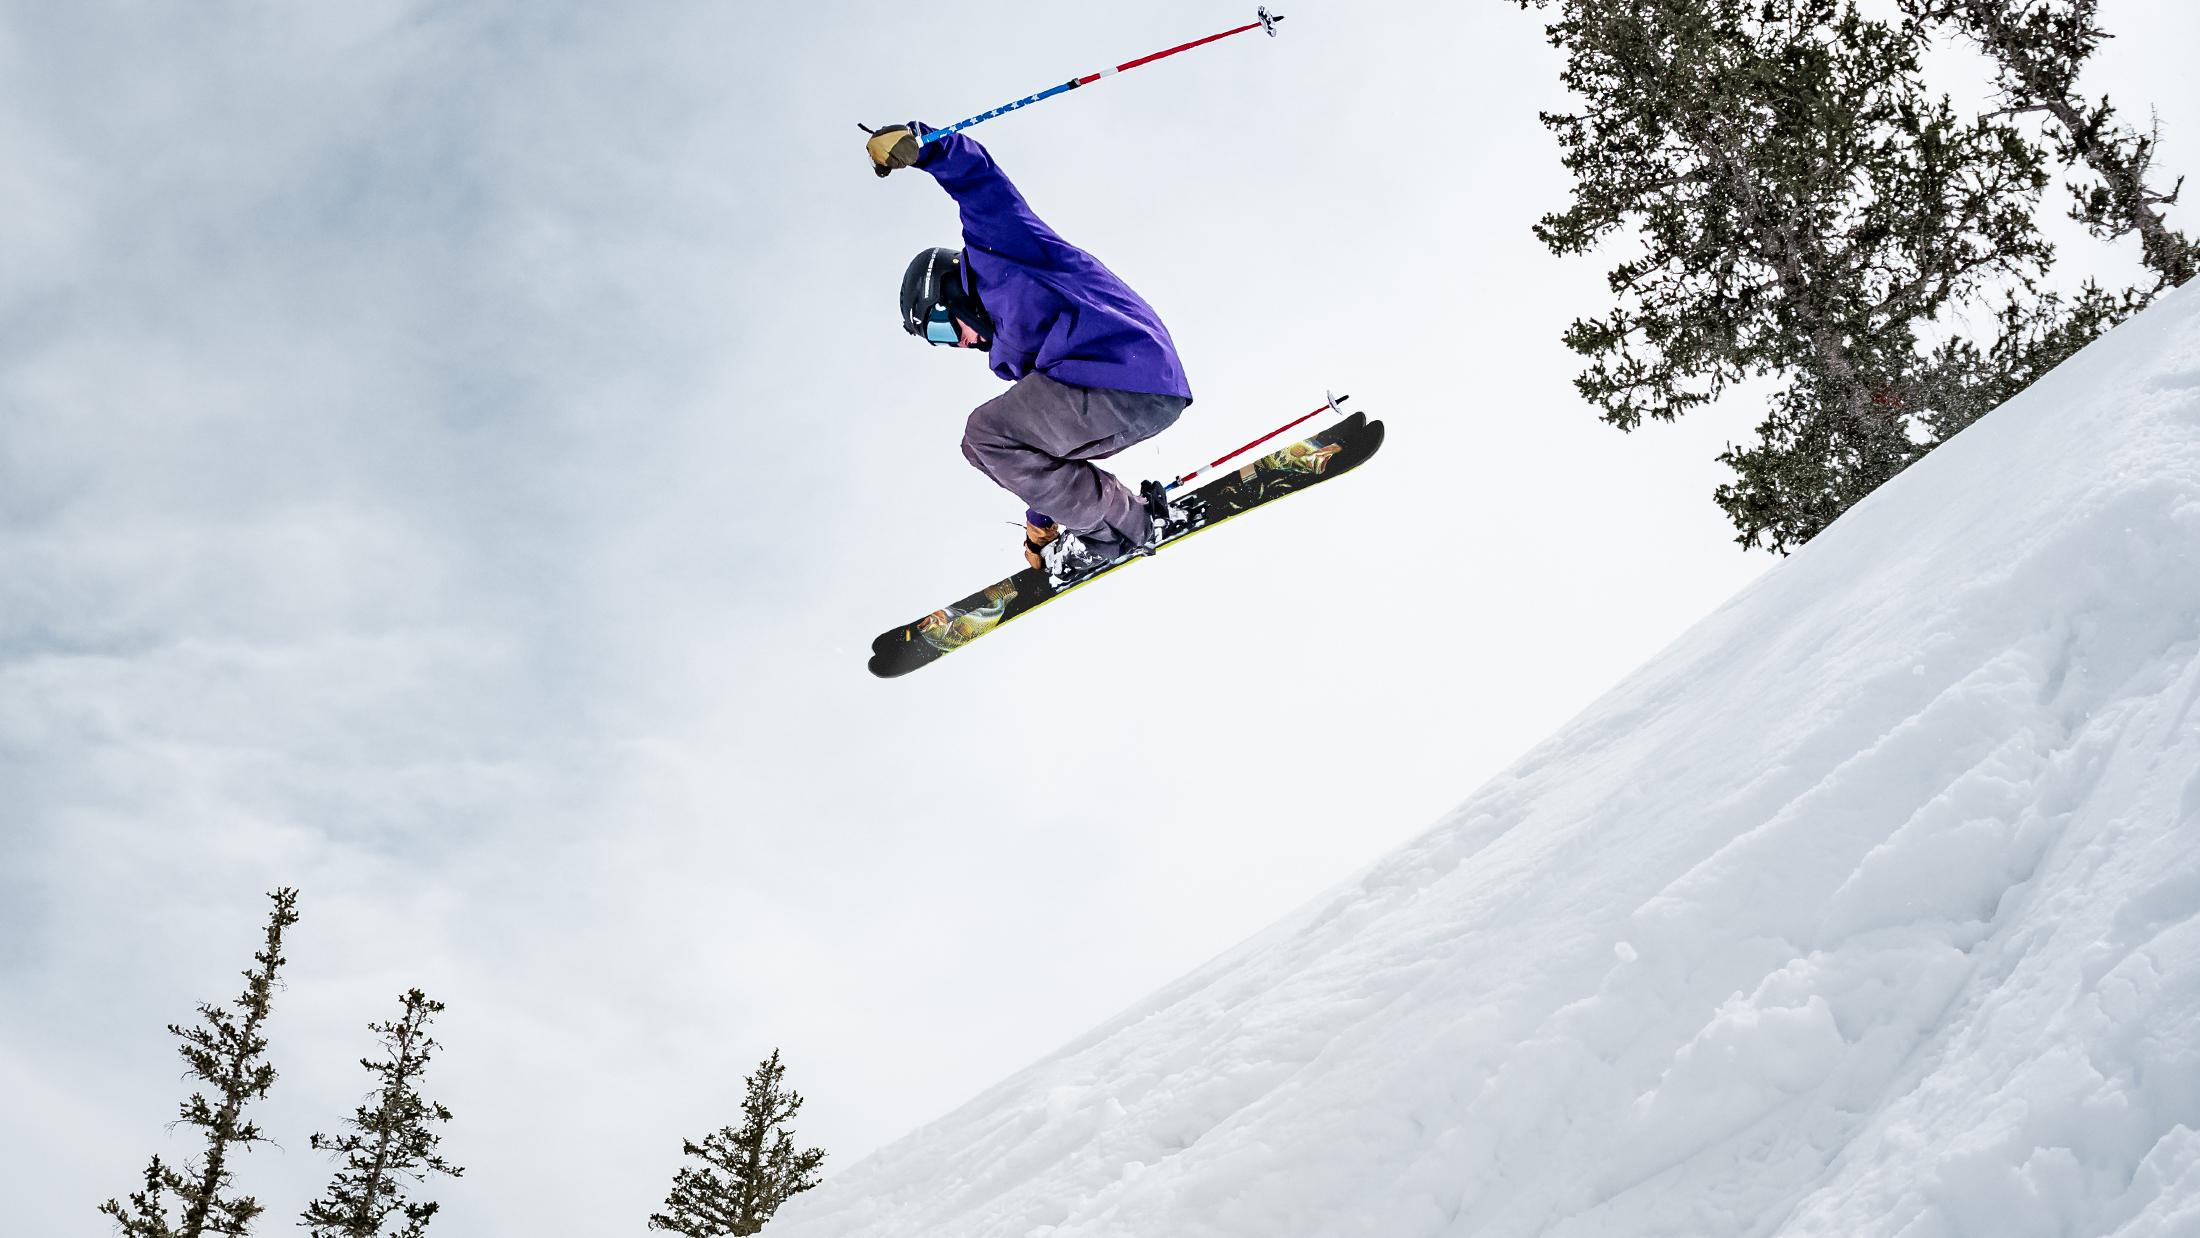 The Allplay "LUNKER" Jon Q. Wright x J Collab Limited Edition Ski Shredding Image